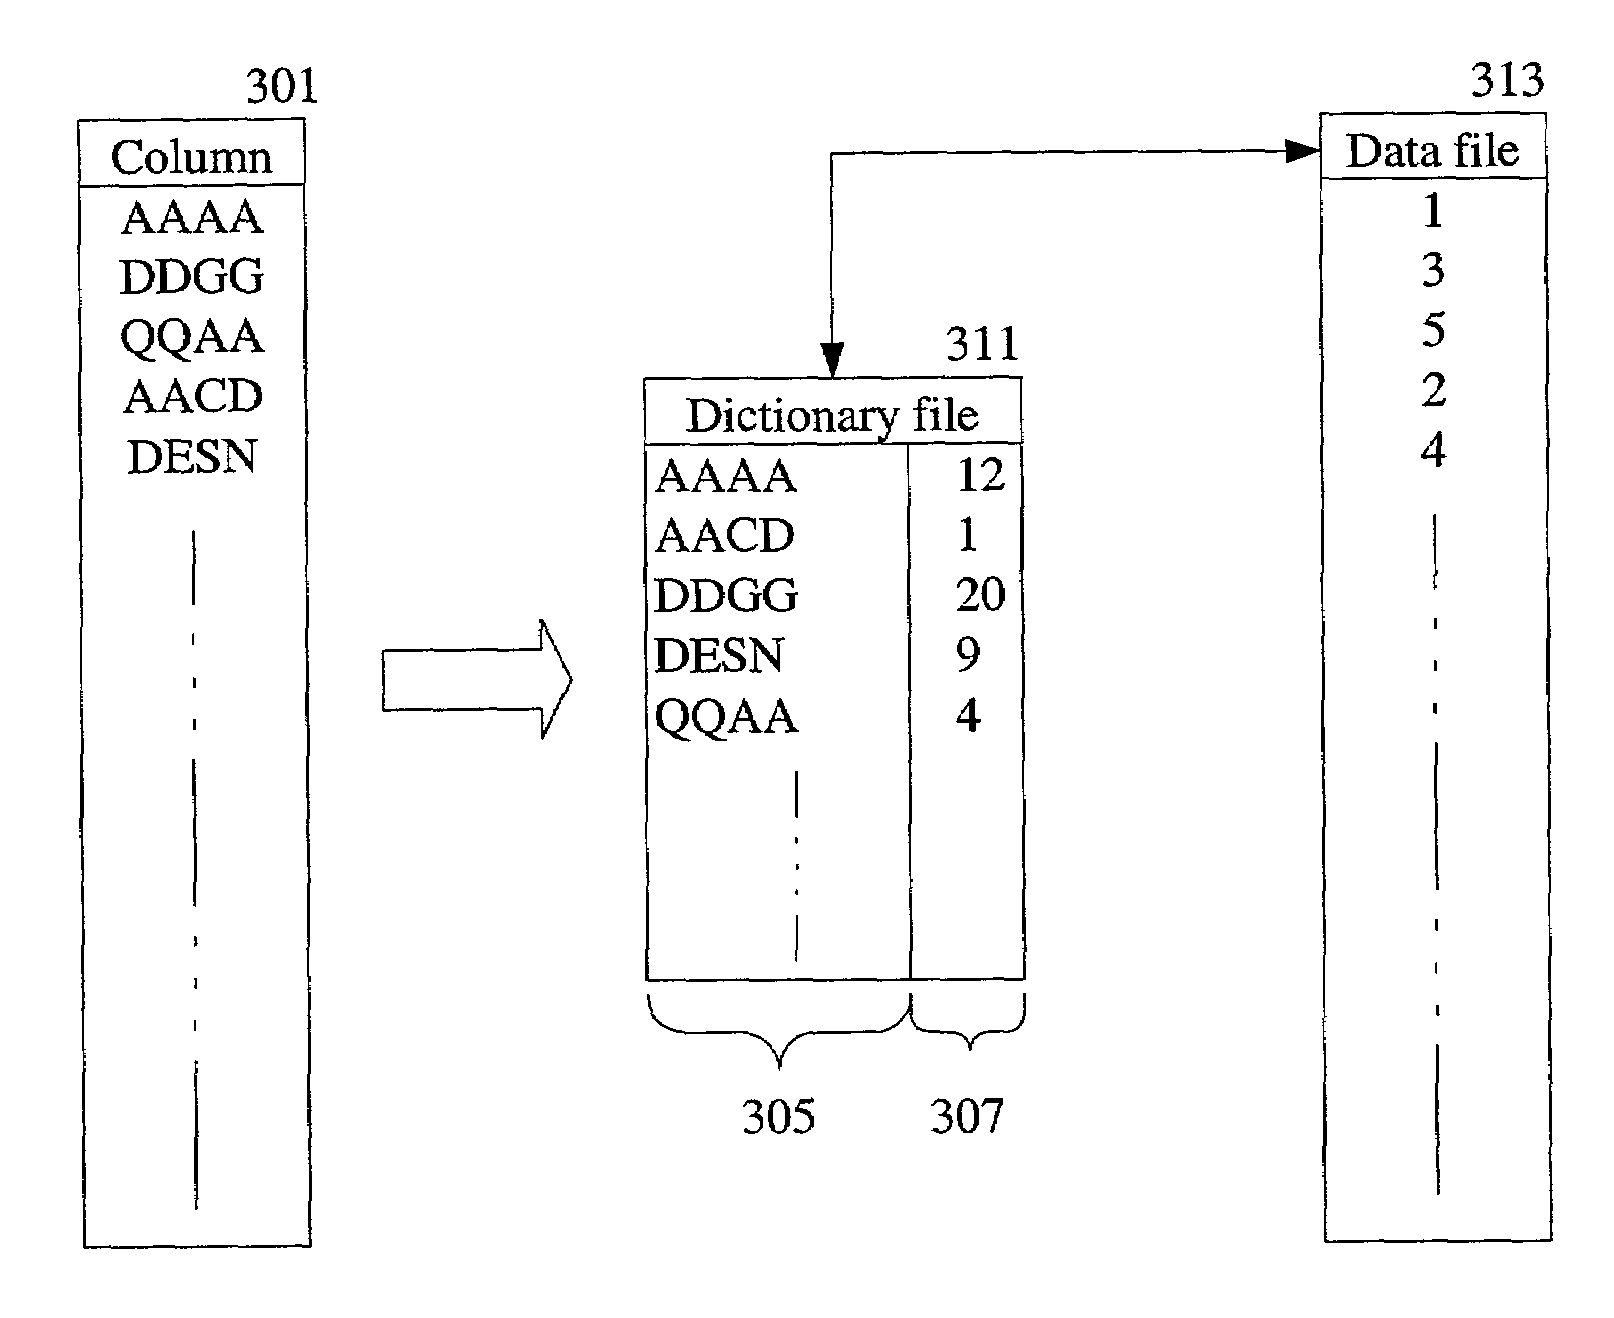 Storage of row-column data